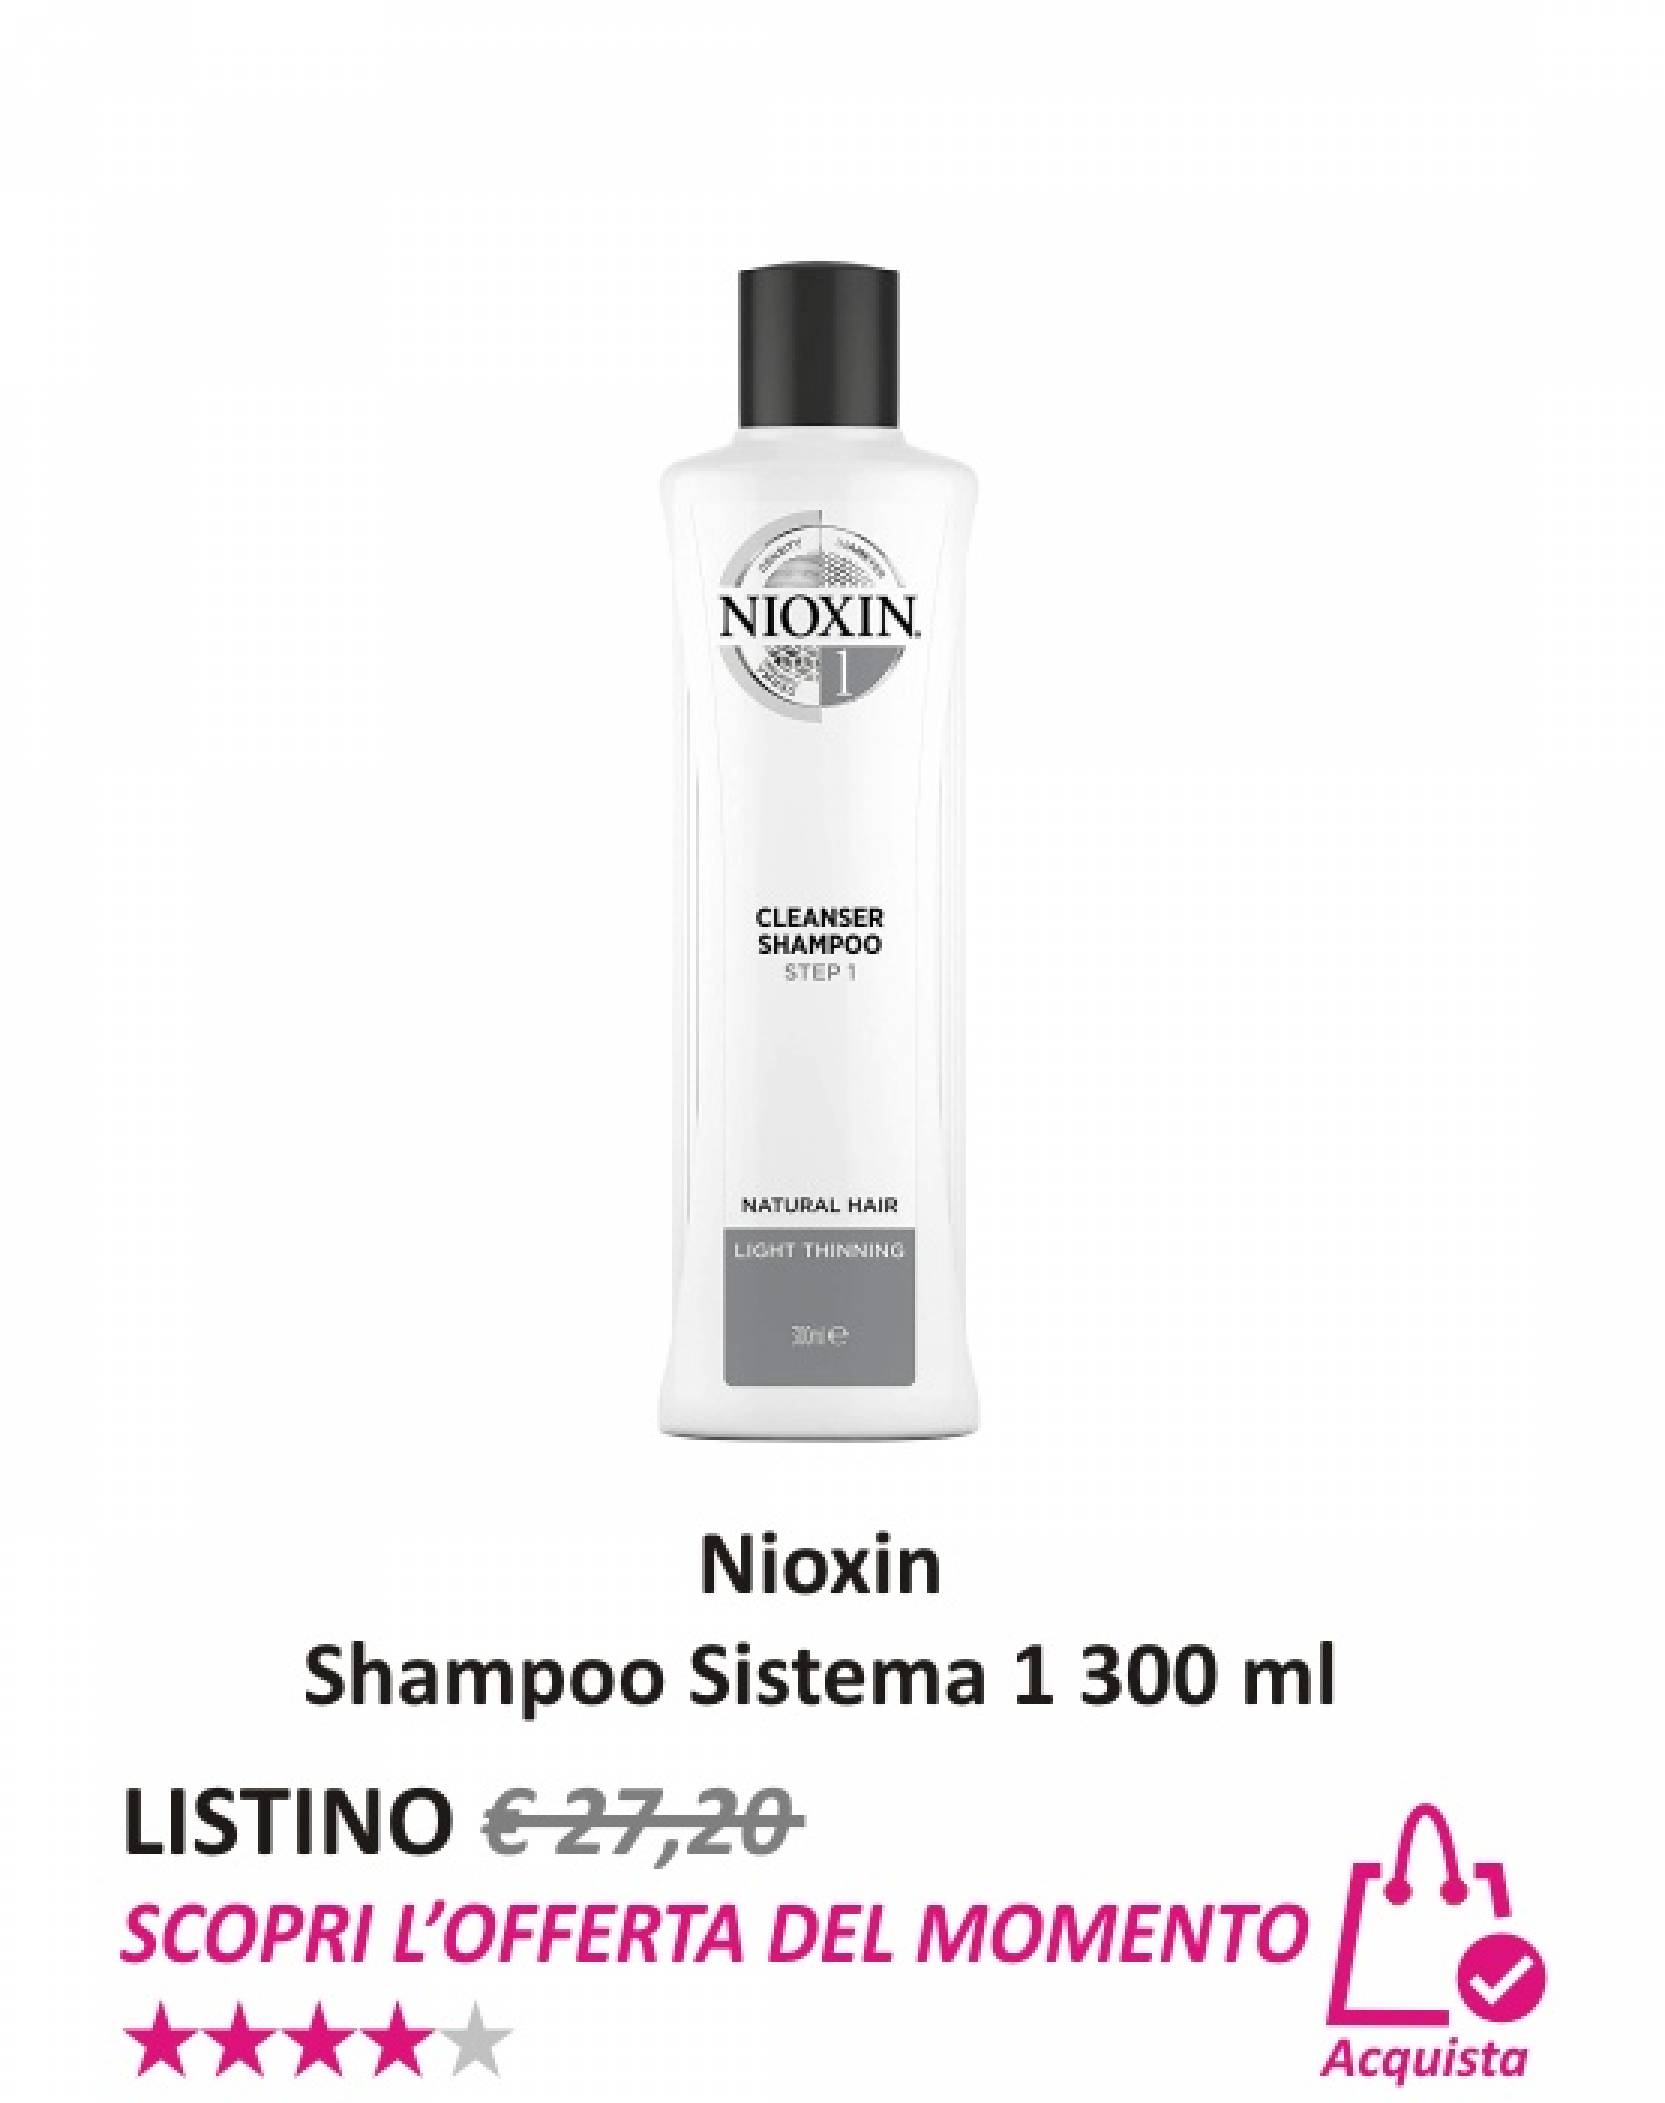 Nioxin Shampoo Sistema 1 300 ml